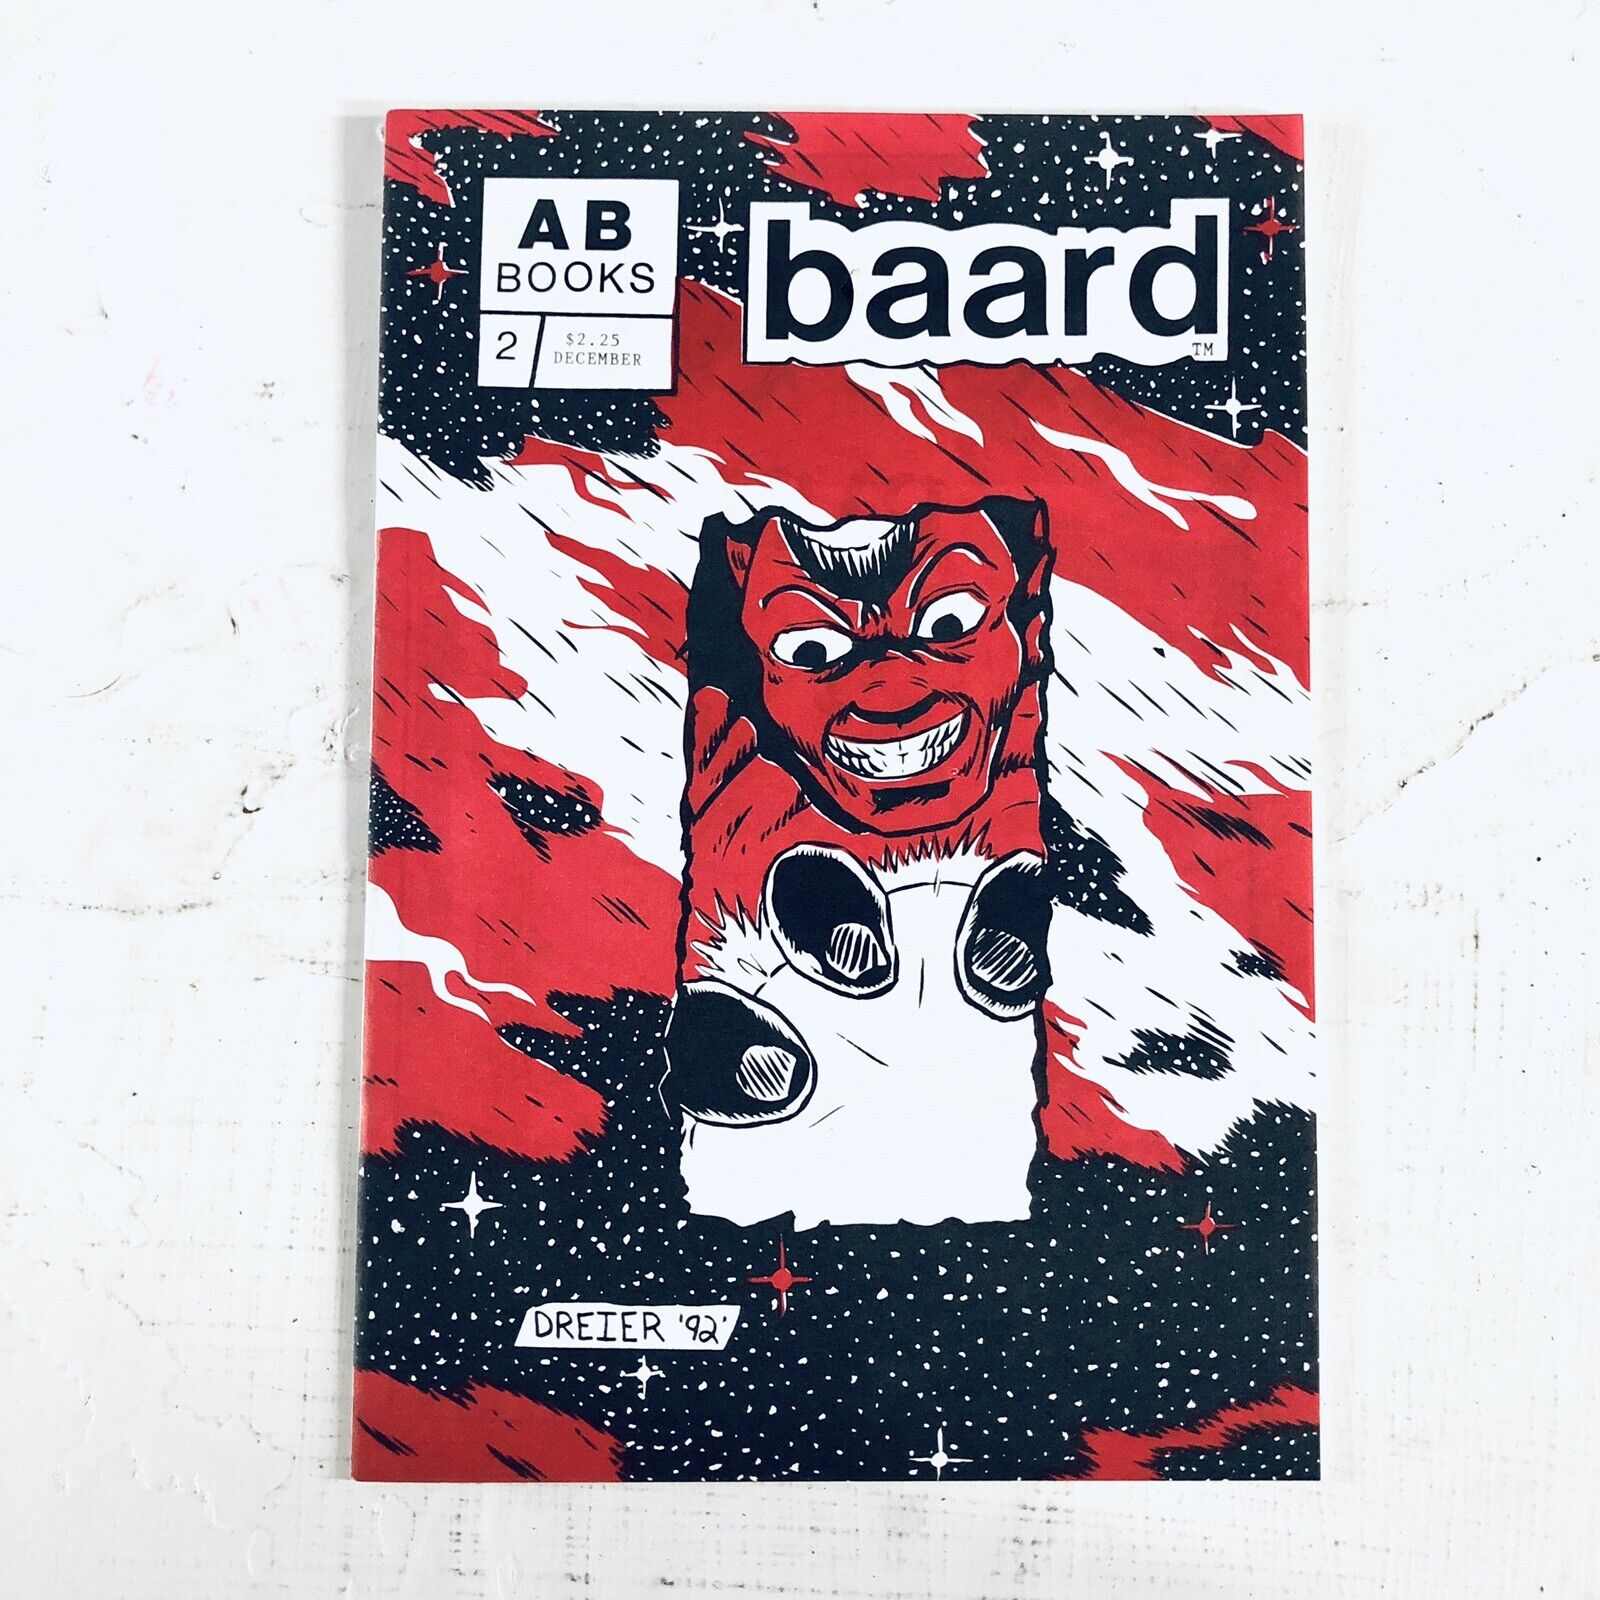 Baard #2 ||| Christopher J. Dreier ||| AB Books |||| 1992